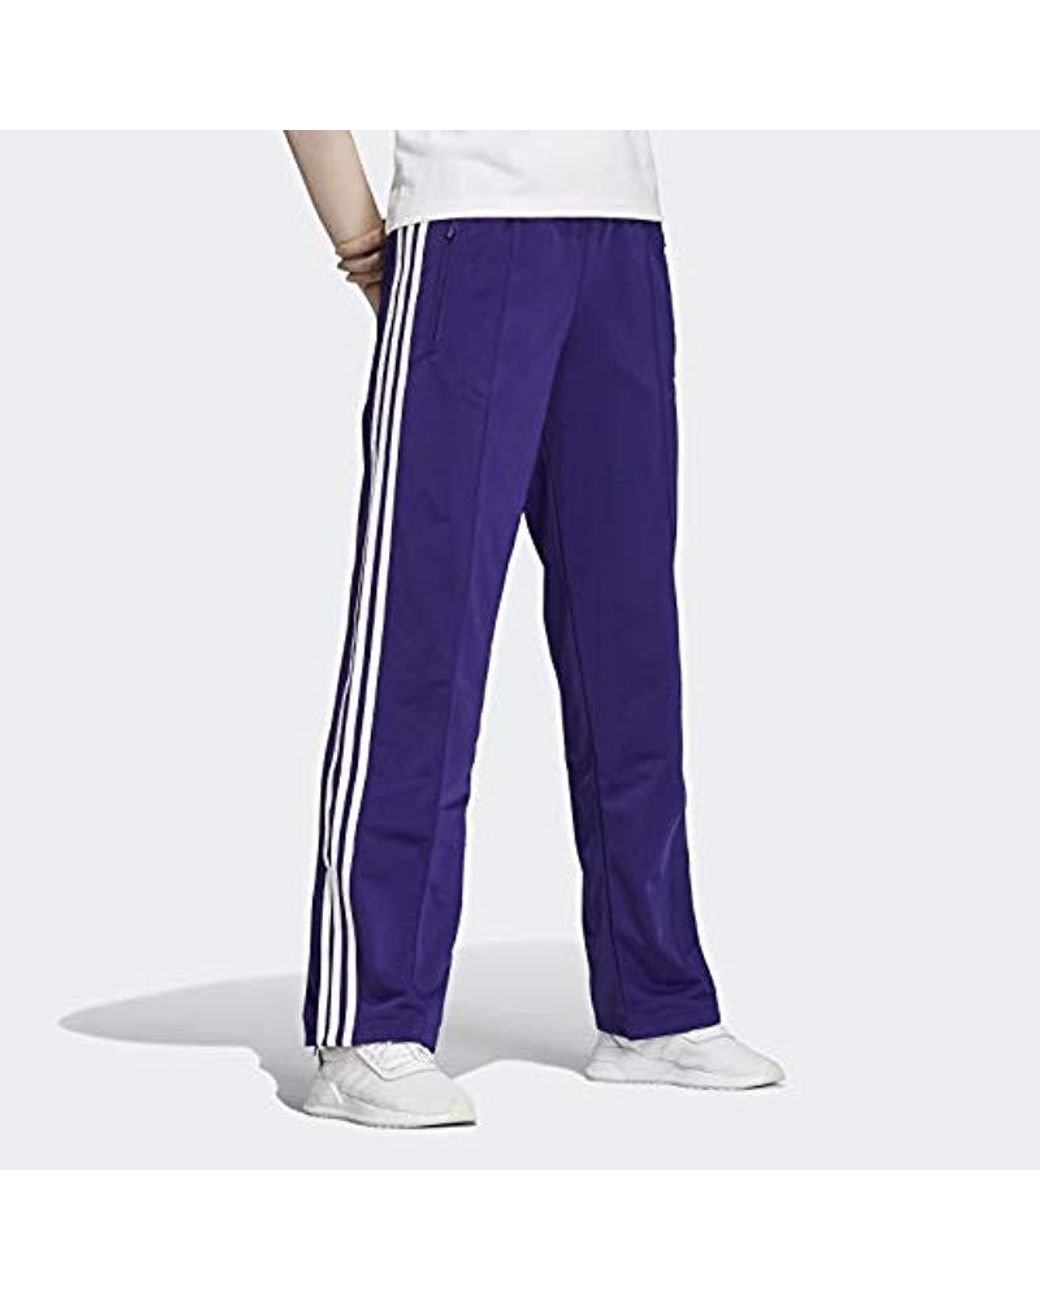 adidas Originals Firebird Mid-rise Track Pants in Purple | Lyst